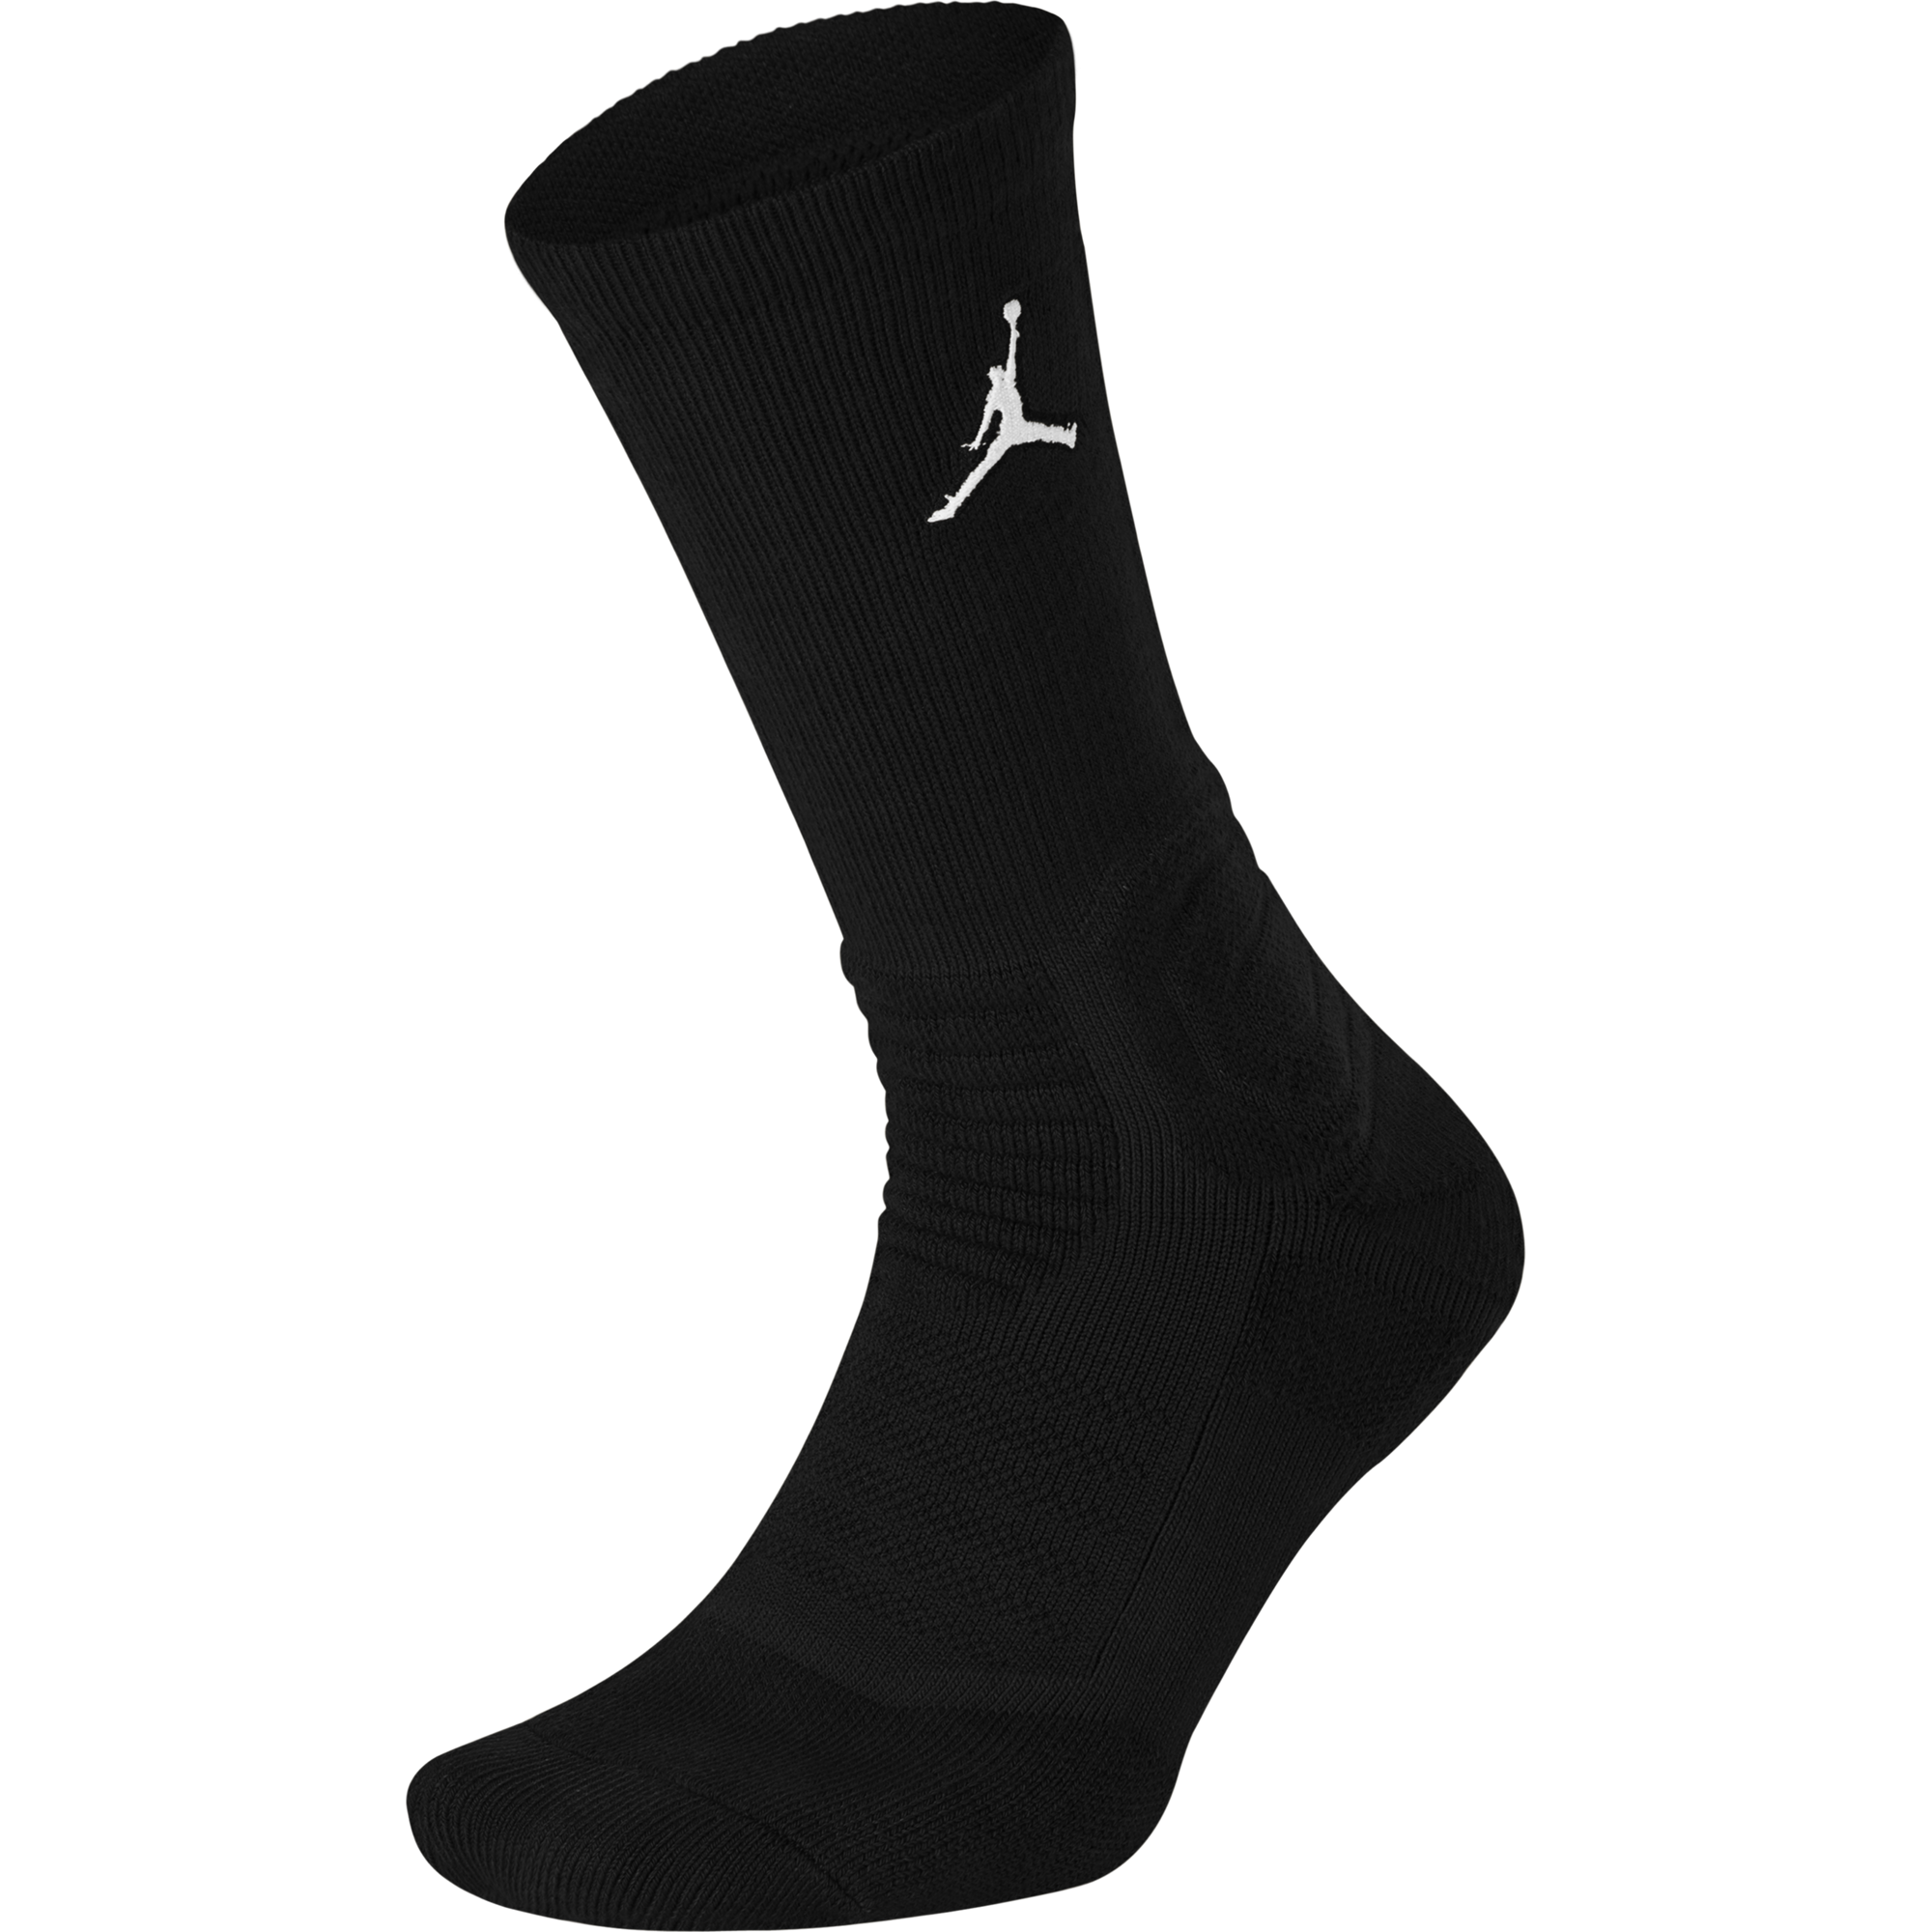 air jordan black socks